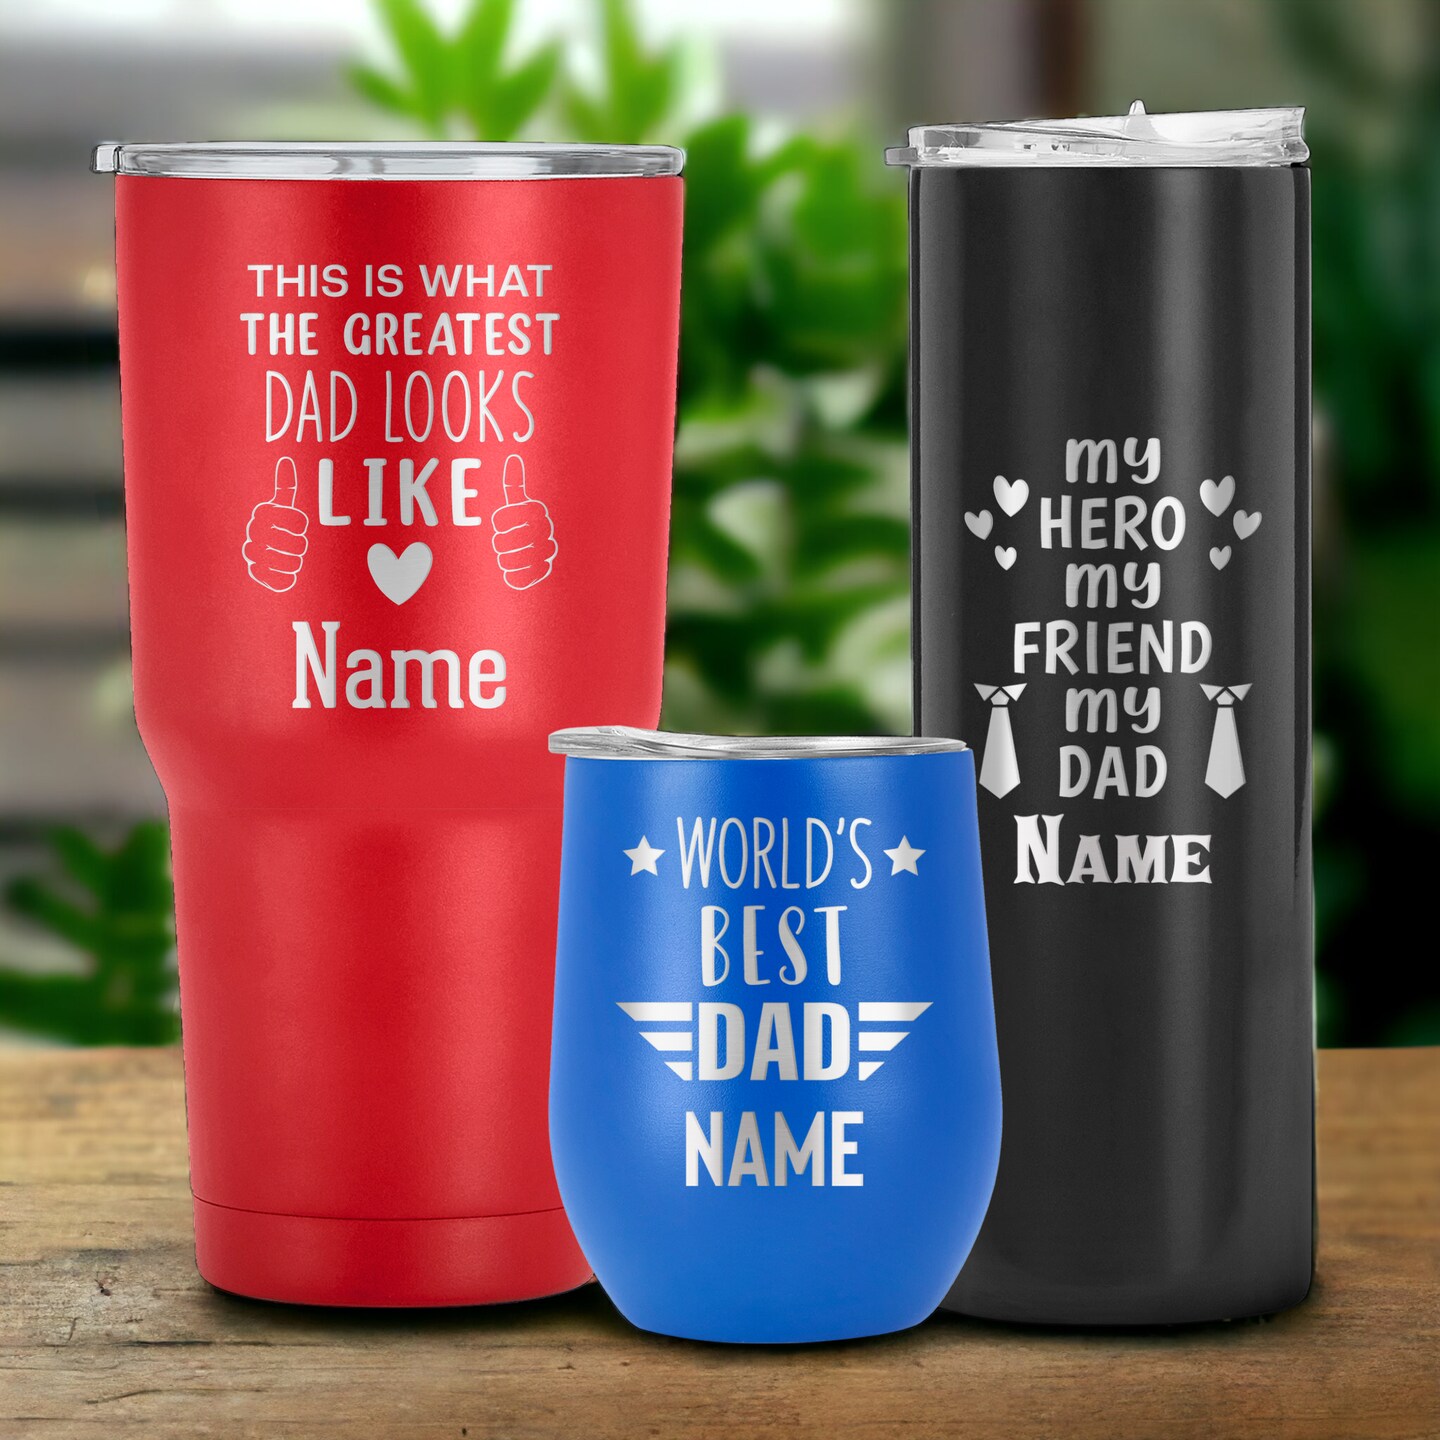 Custom Papa Bear Coffee Mug - Personalized Cup Gifts for Birthday